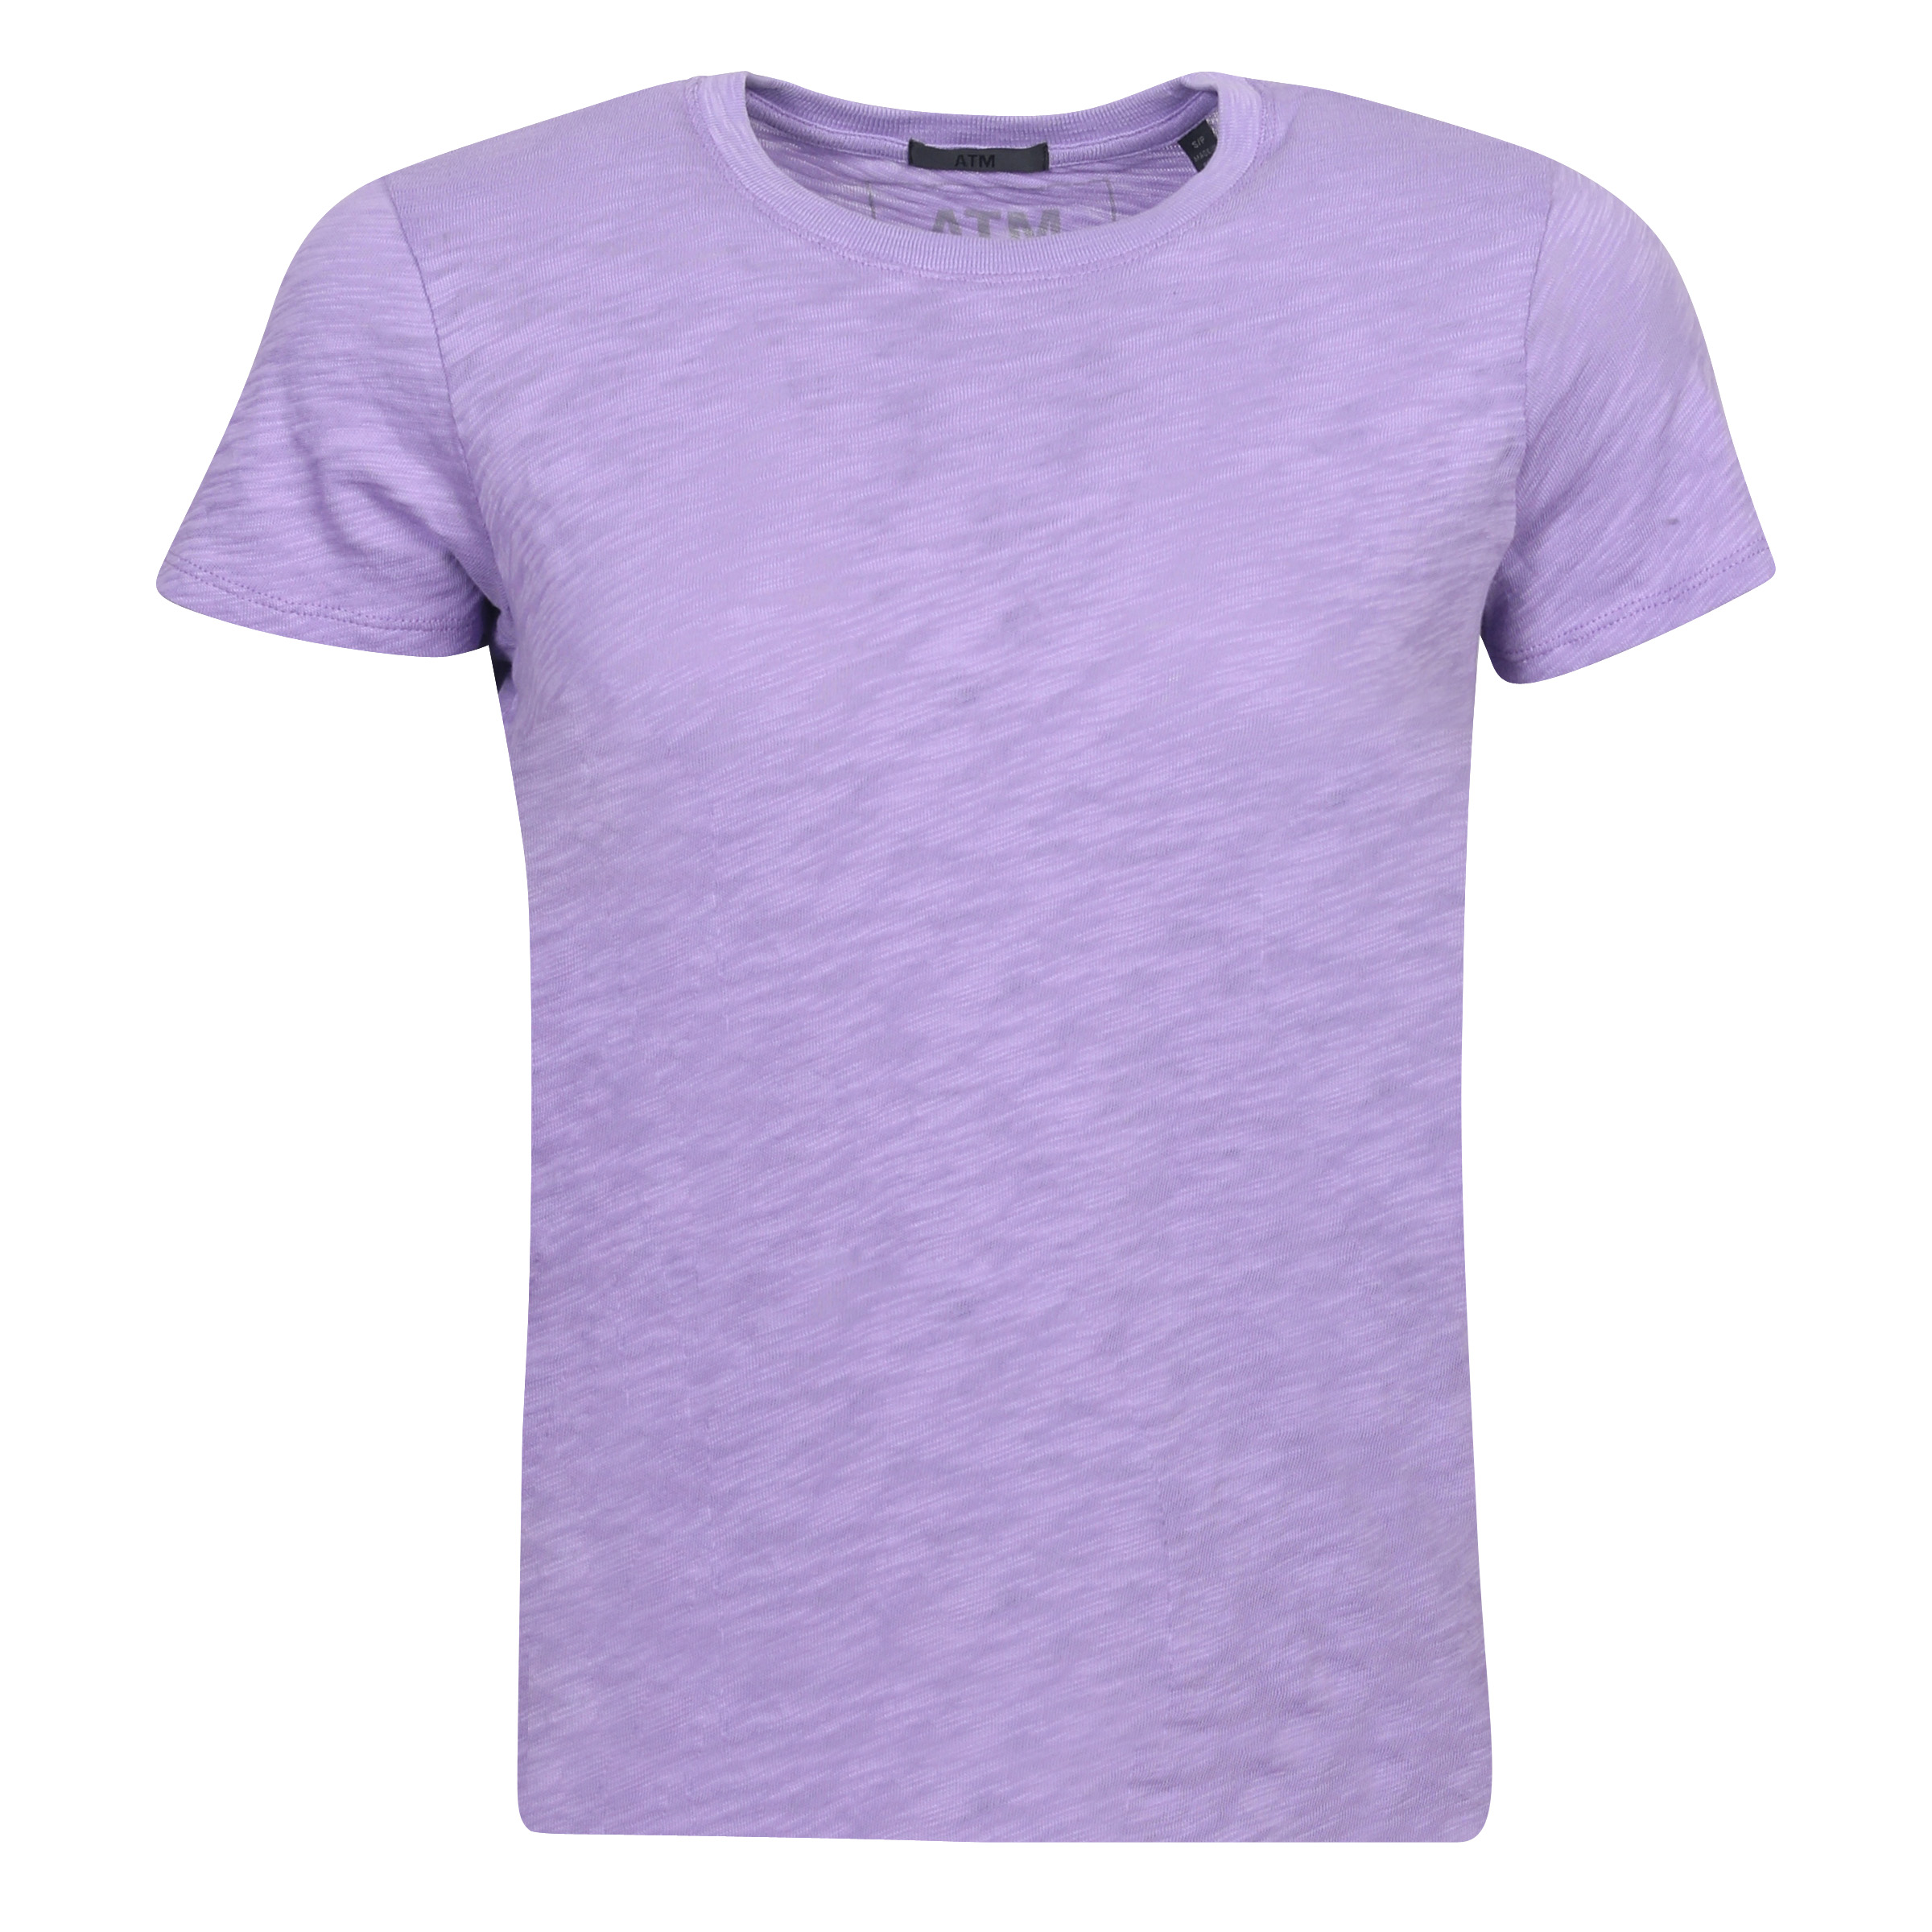 ATM Slub Jersey T-Shirt Crewneck Lilac S